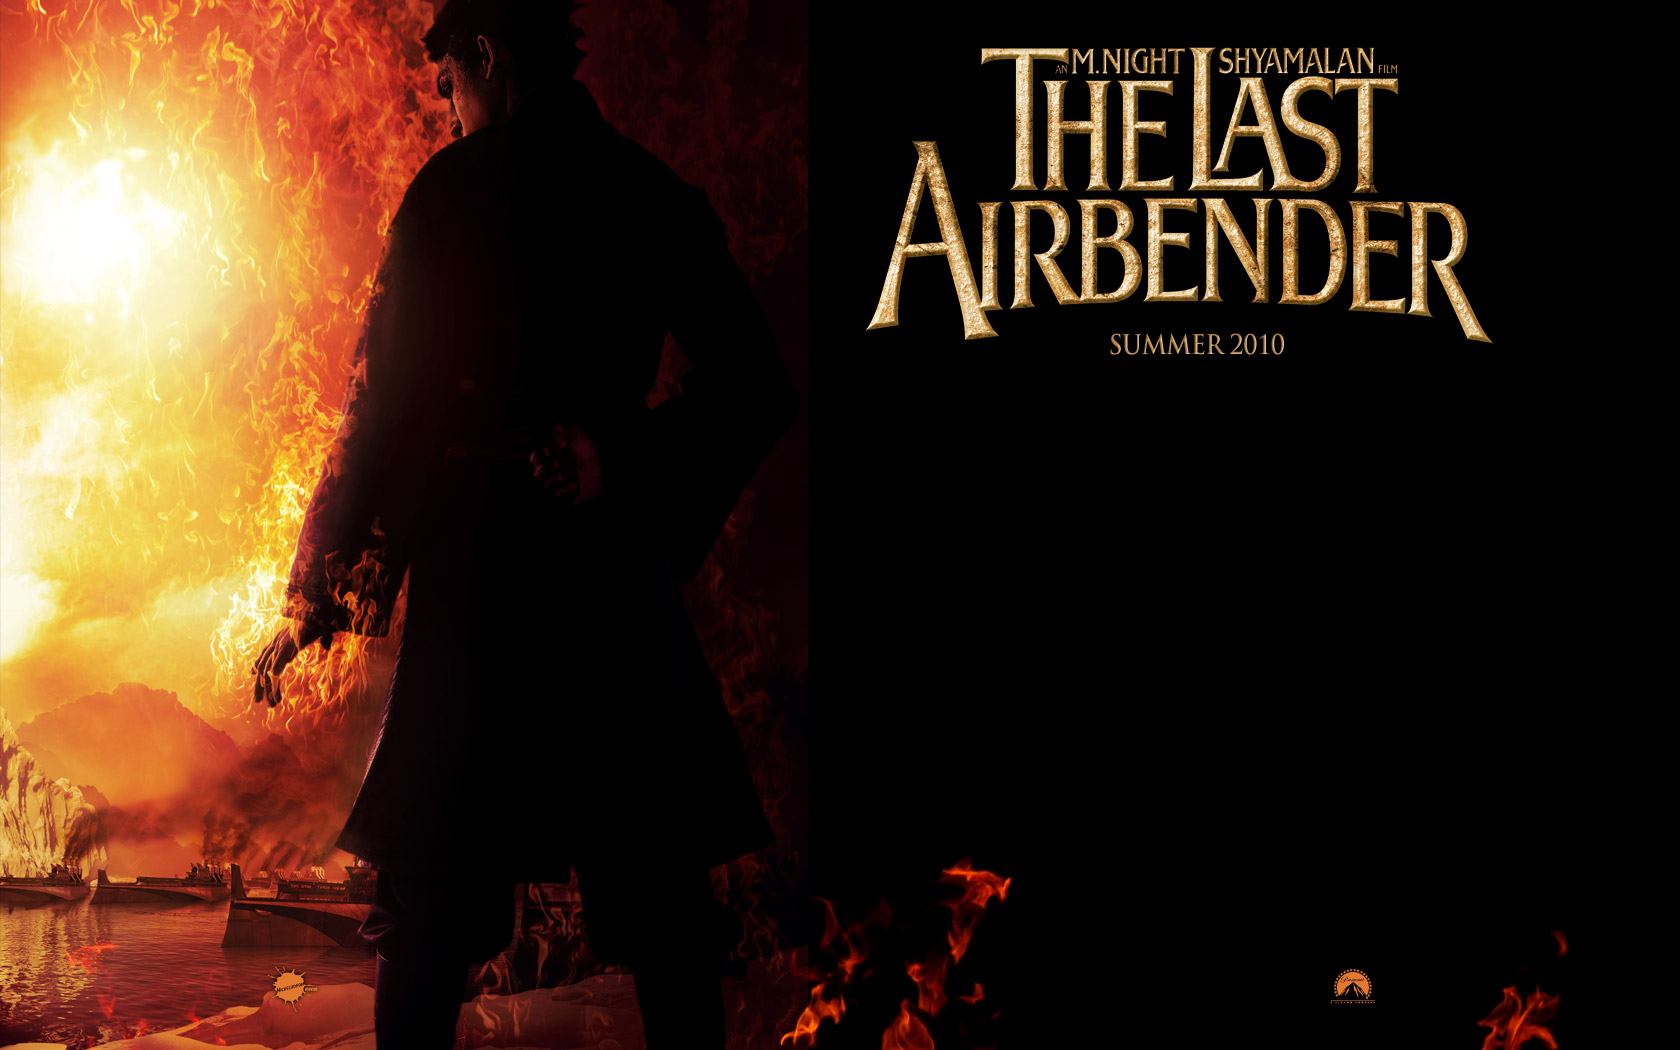 Avatar the Last Airbender LiveAction Movie